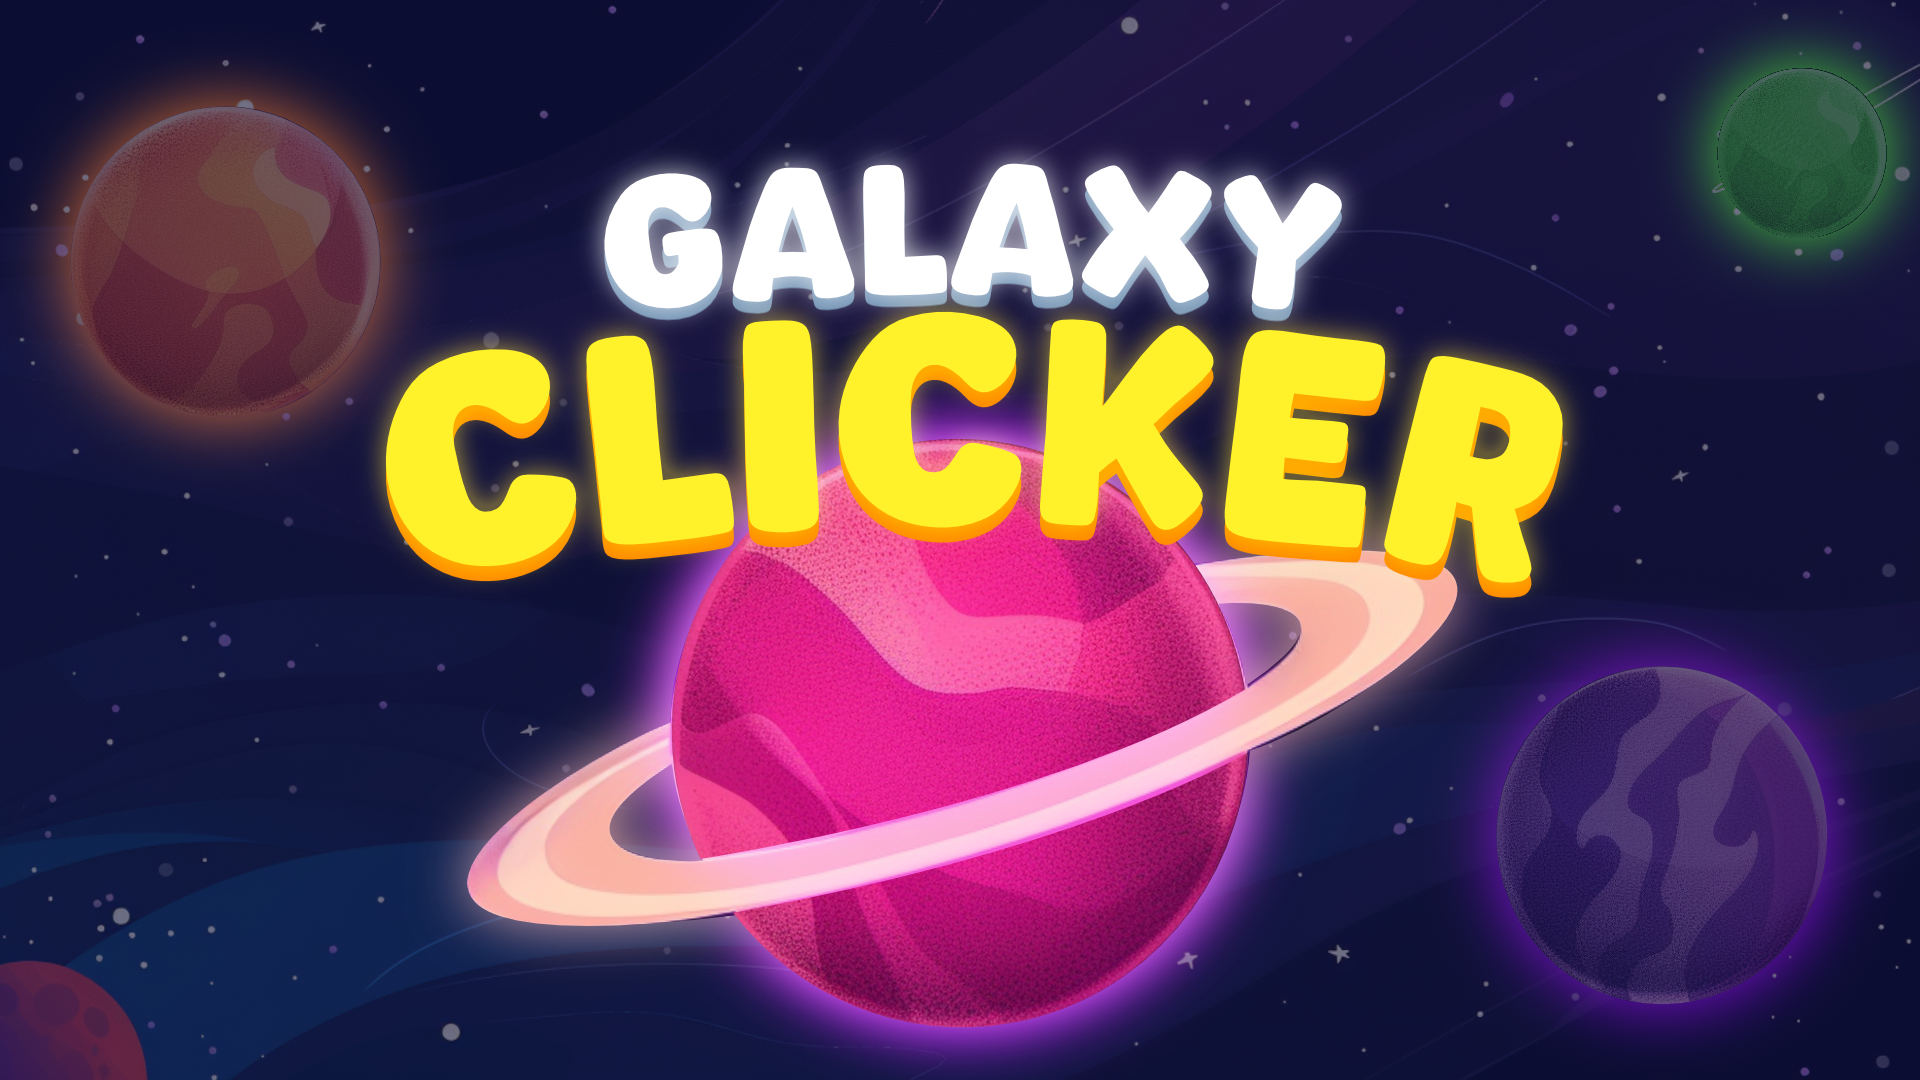 Galaxy Clicker Game Image